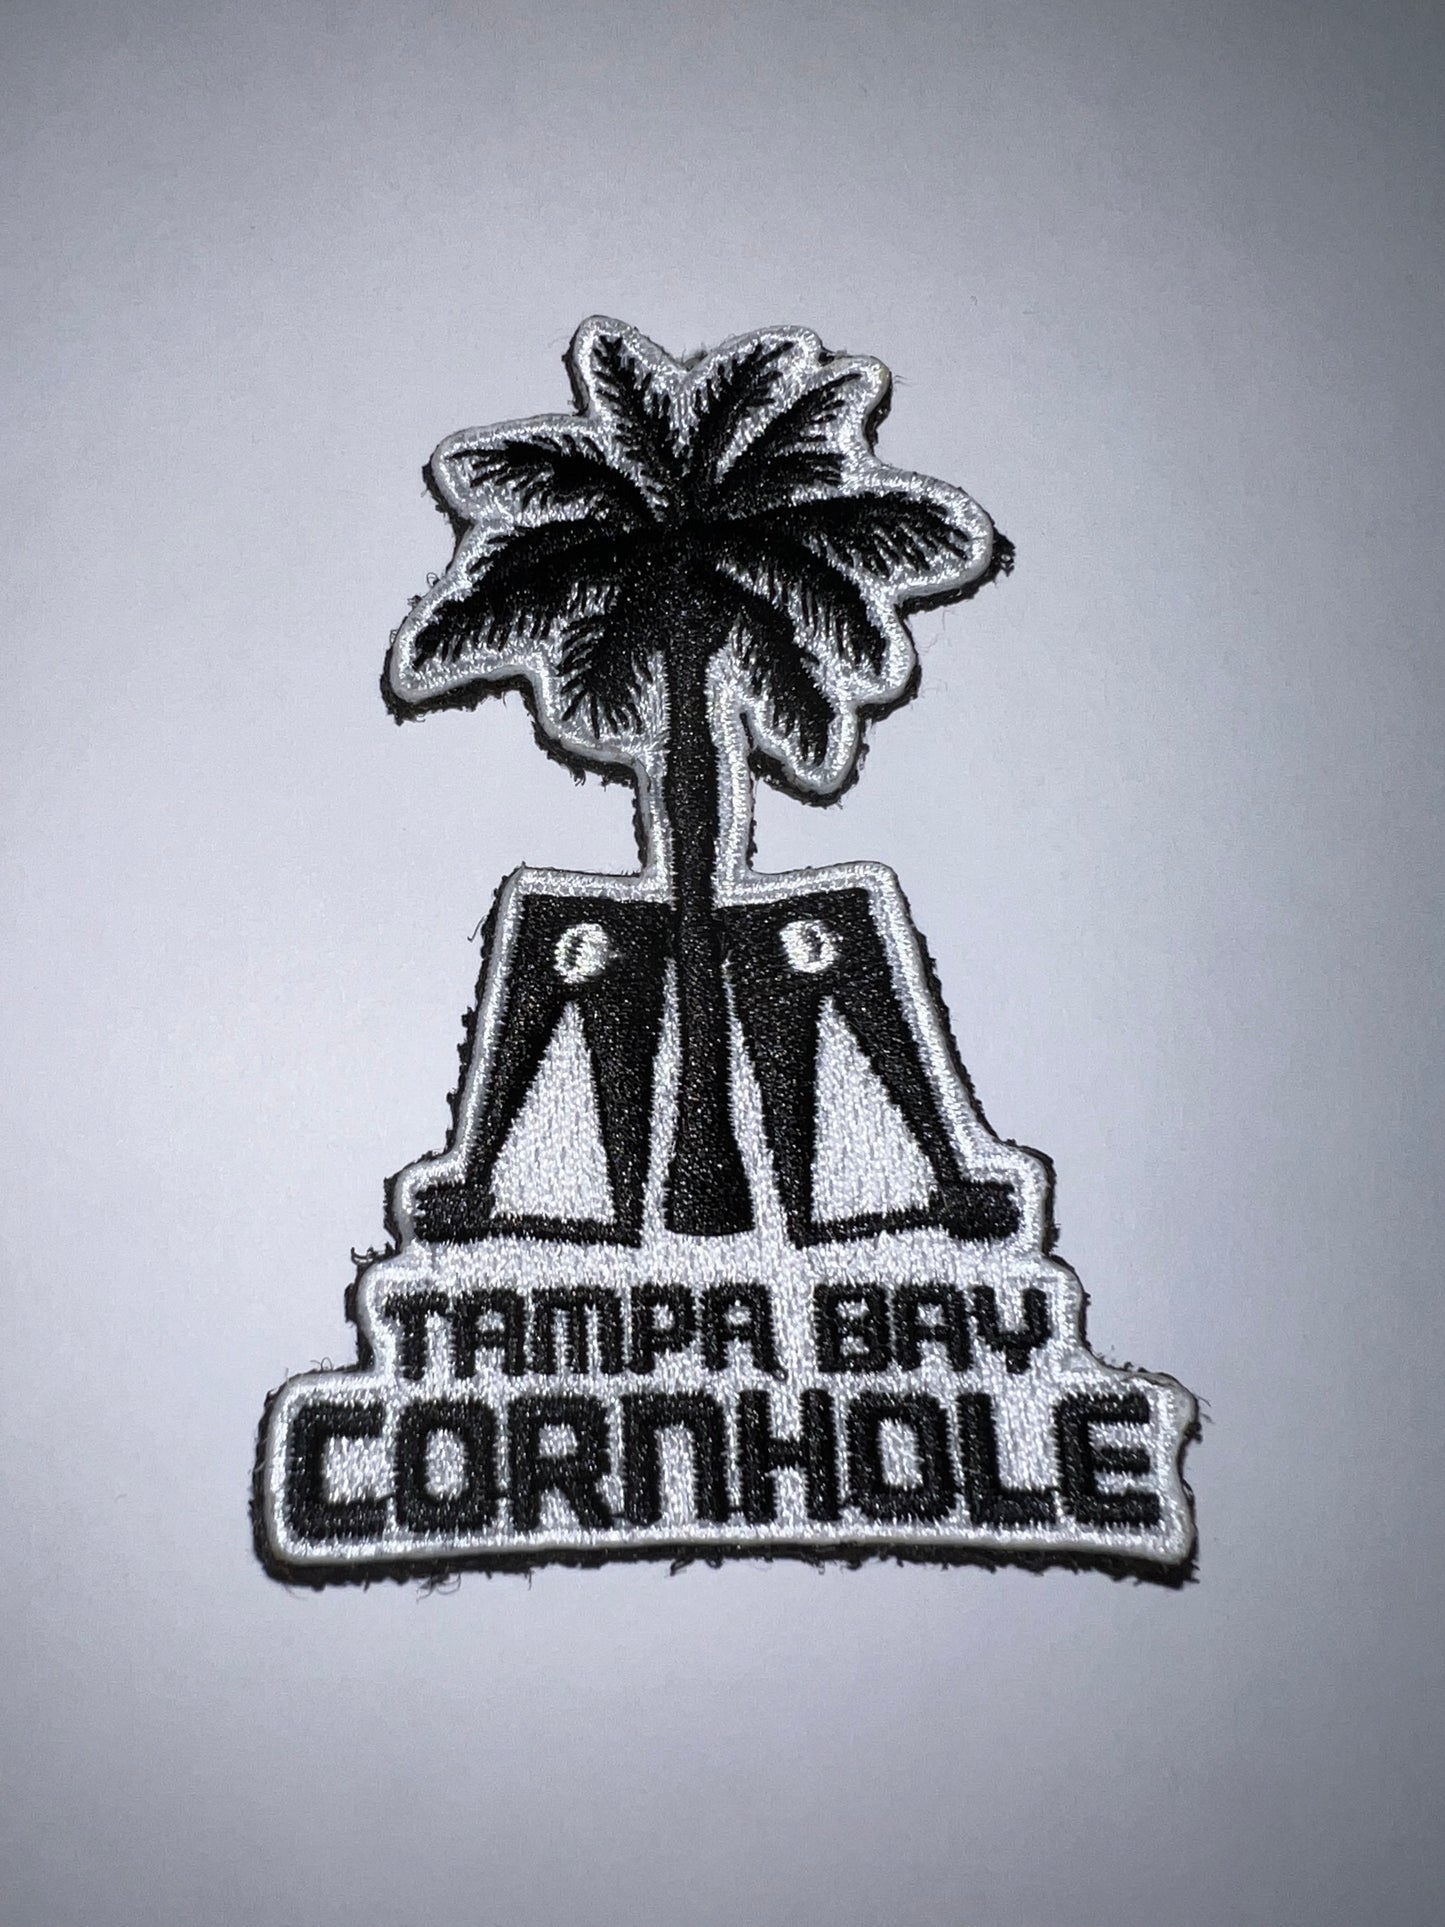 Tampa Bay Cornhole